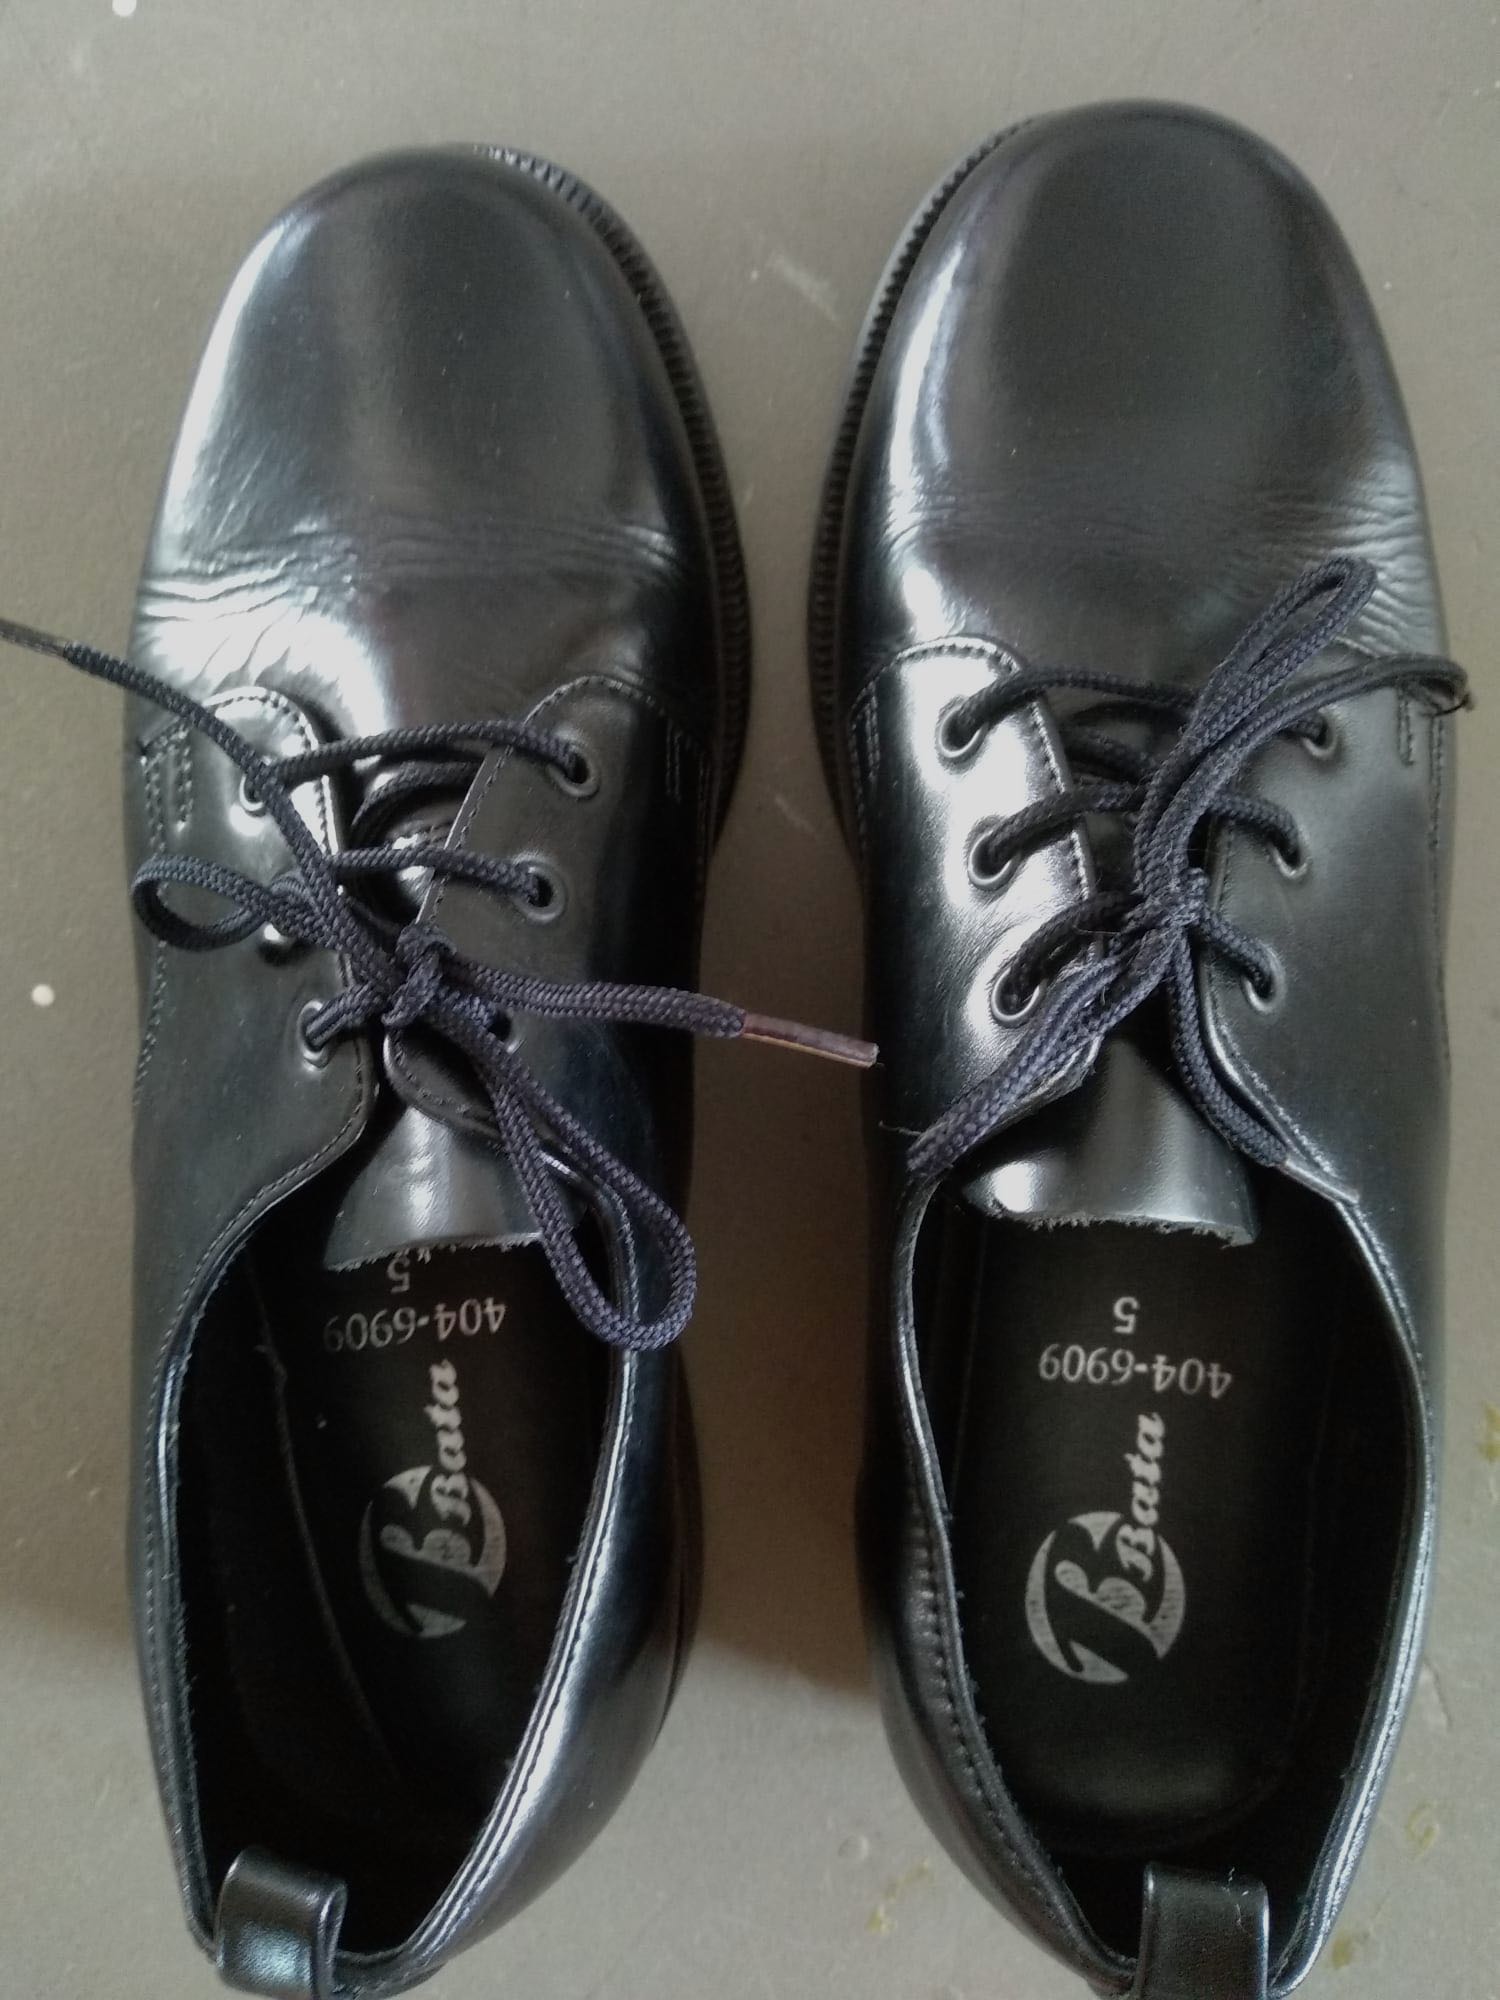 Bata boy size 5 Black dress shoes - great for formal or school concert ...